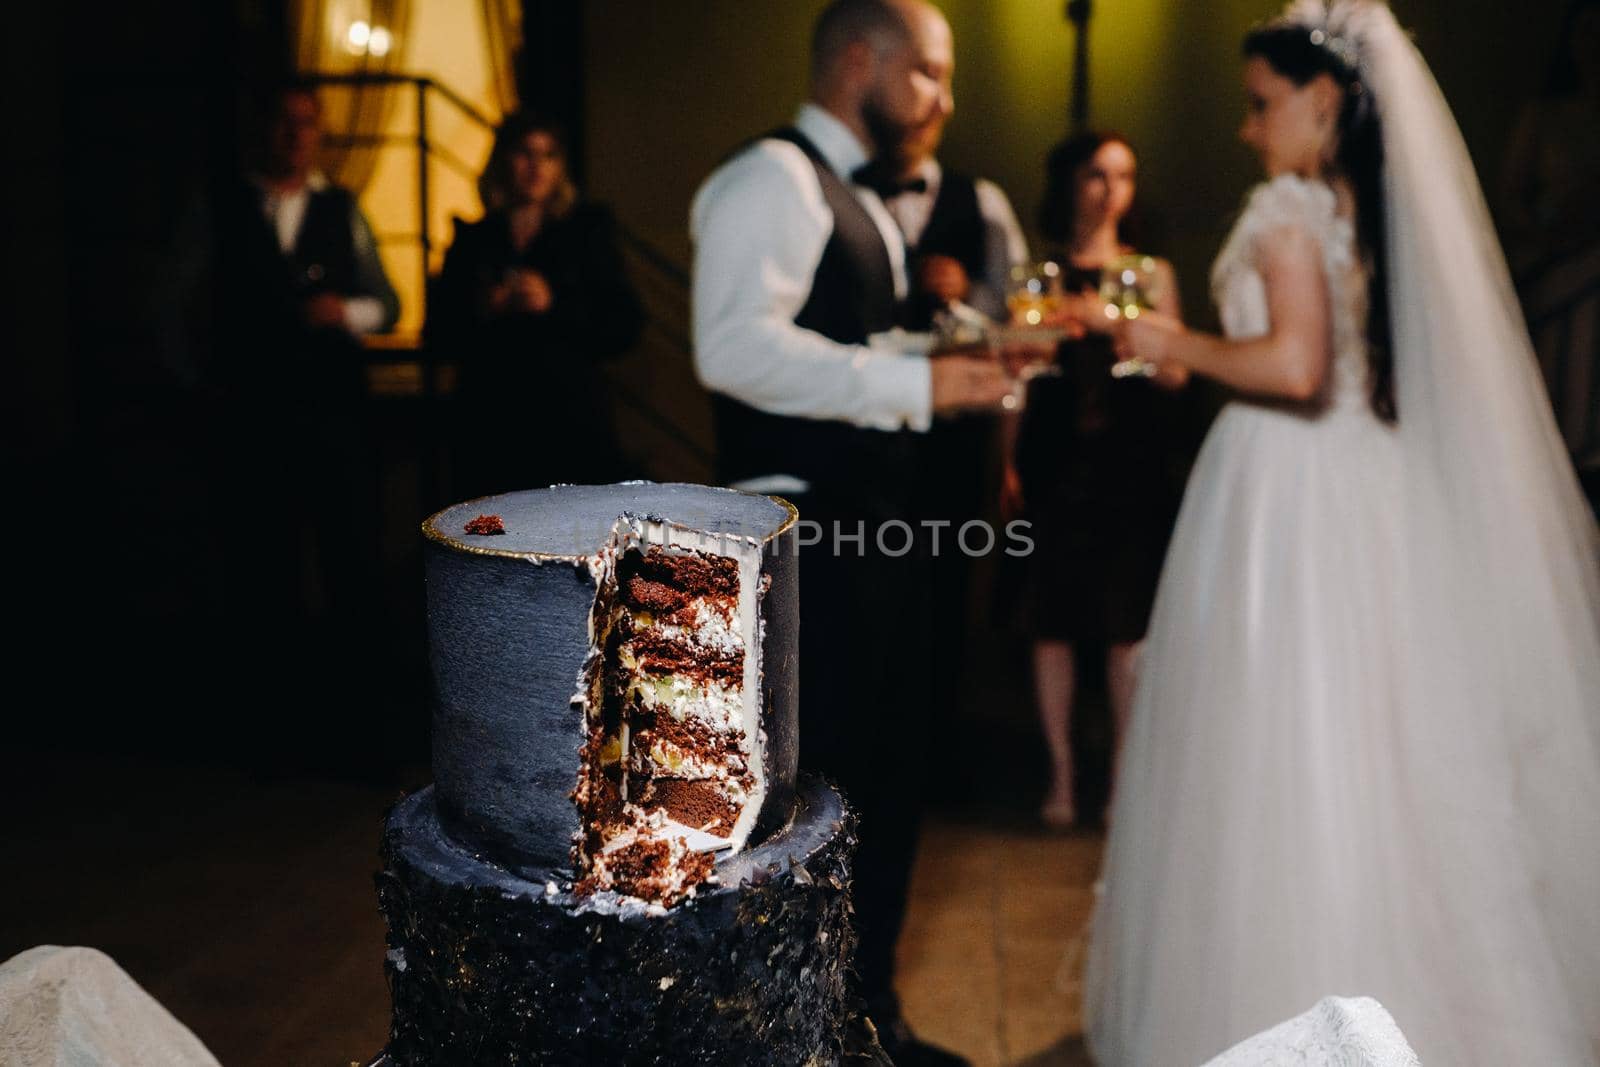 A close-up cut of a wedding cake at a wedding by Lobachad